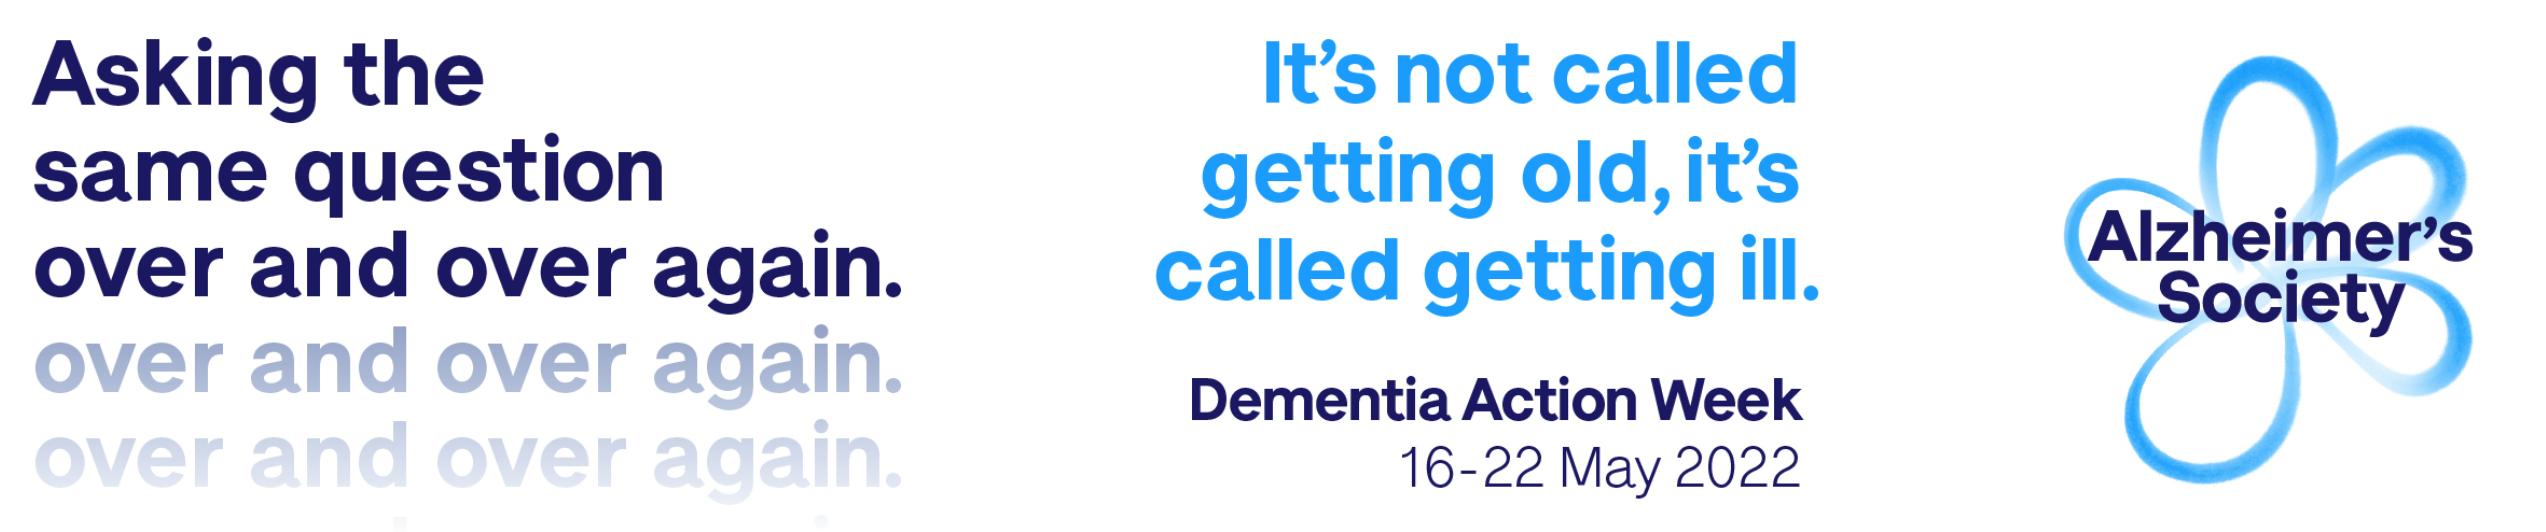 Dementia Action Week 2022 graphic